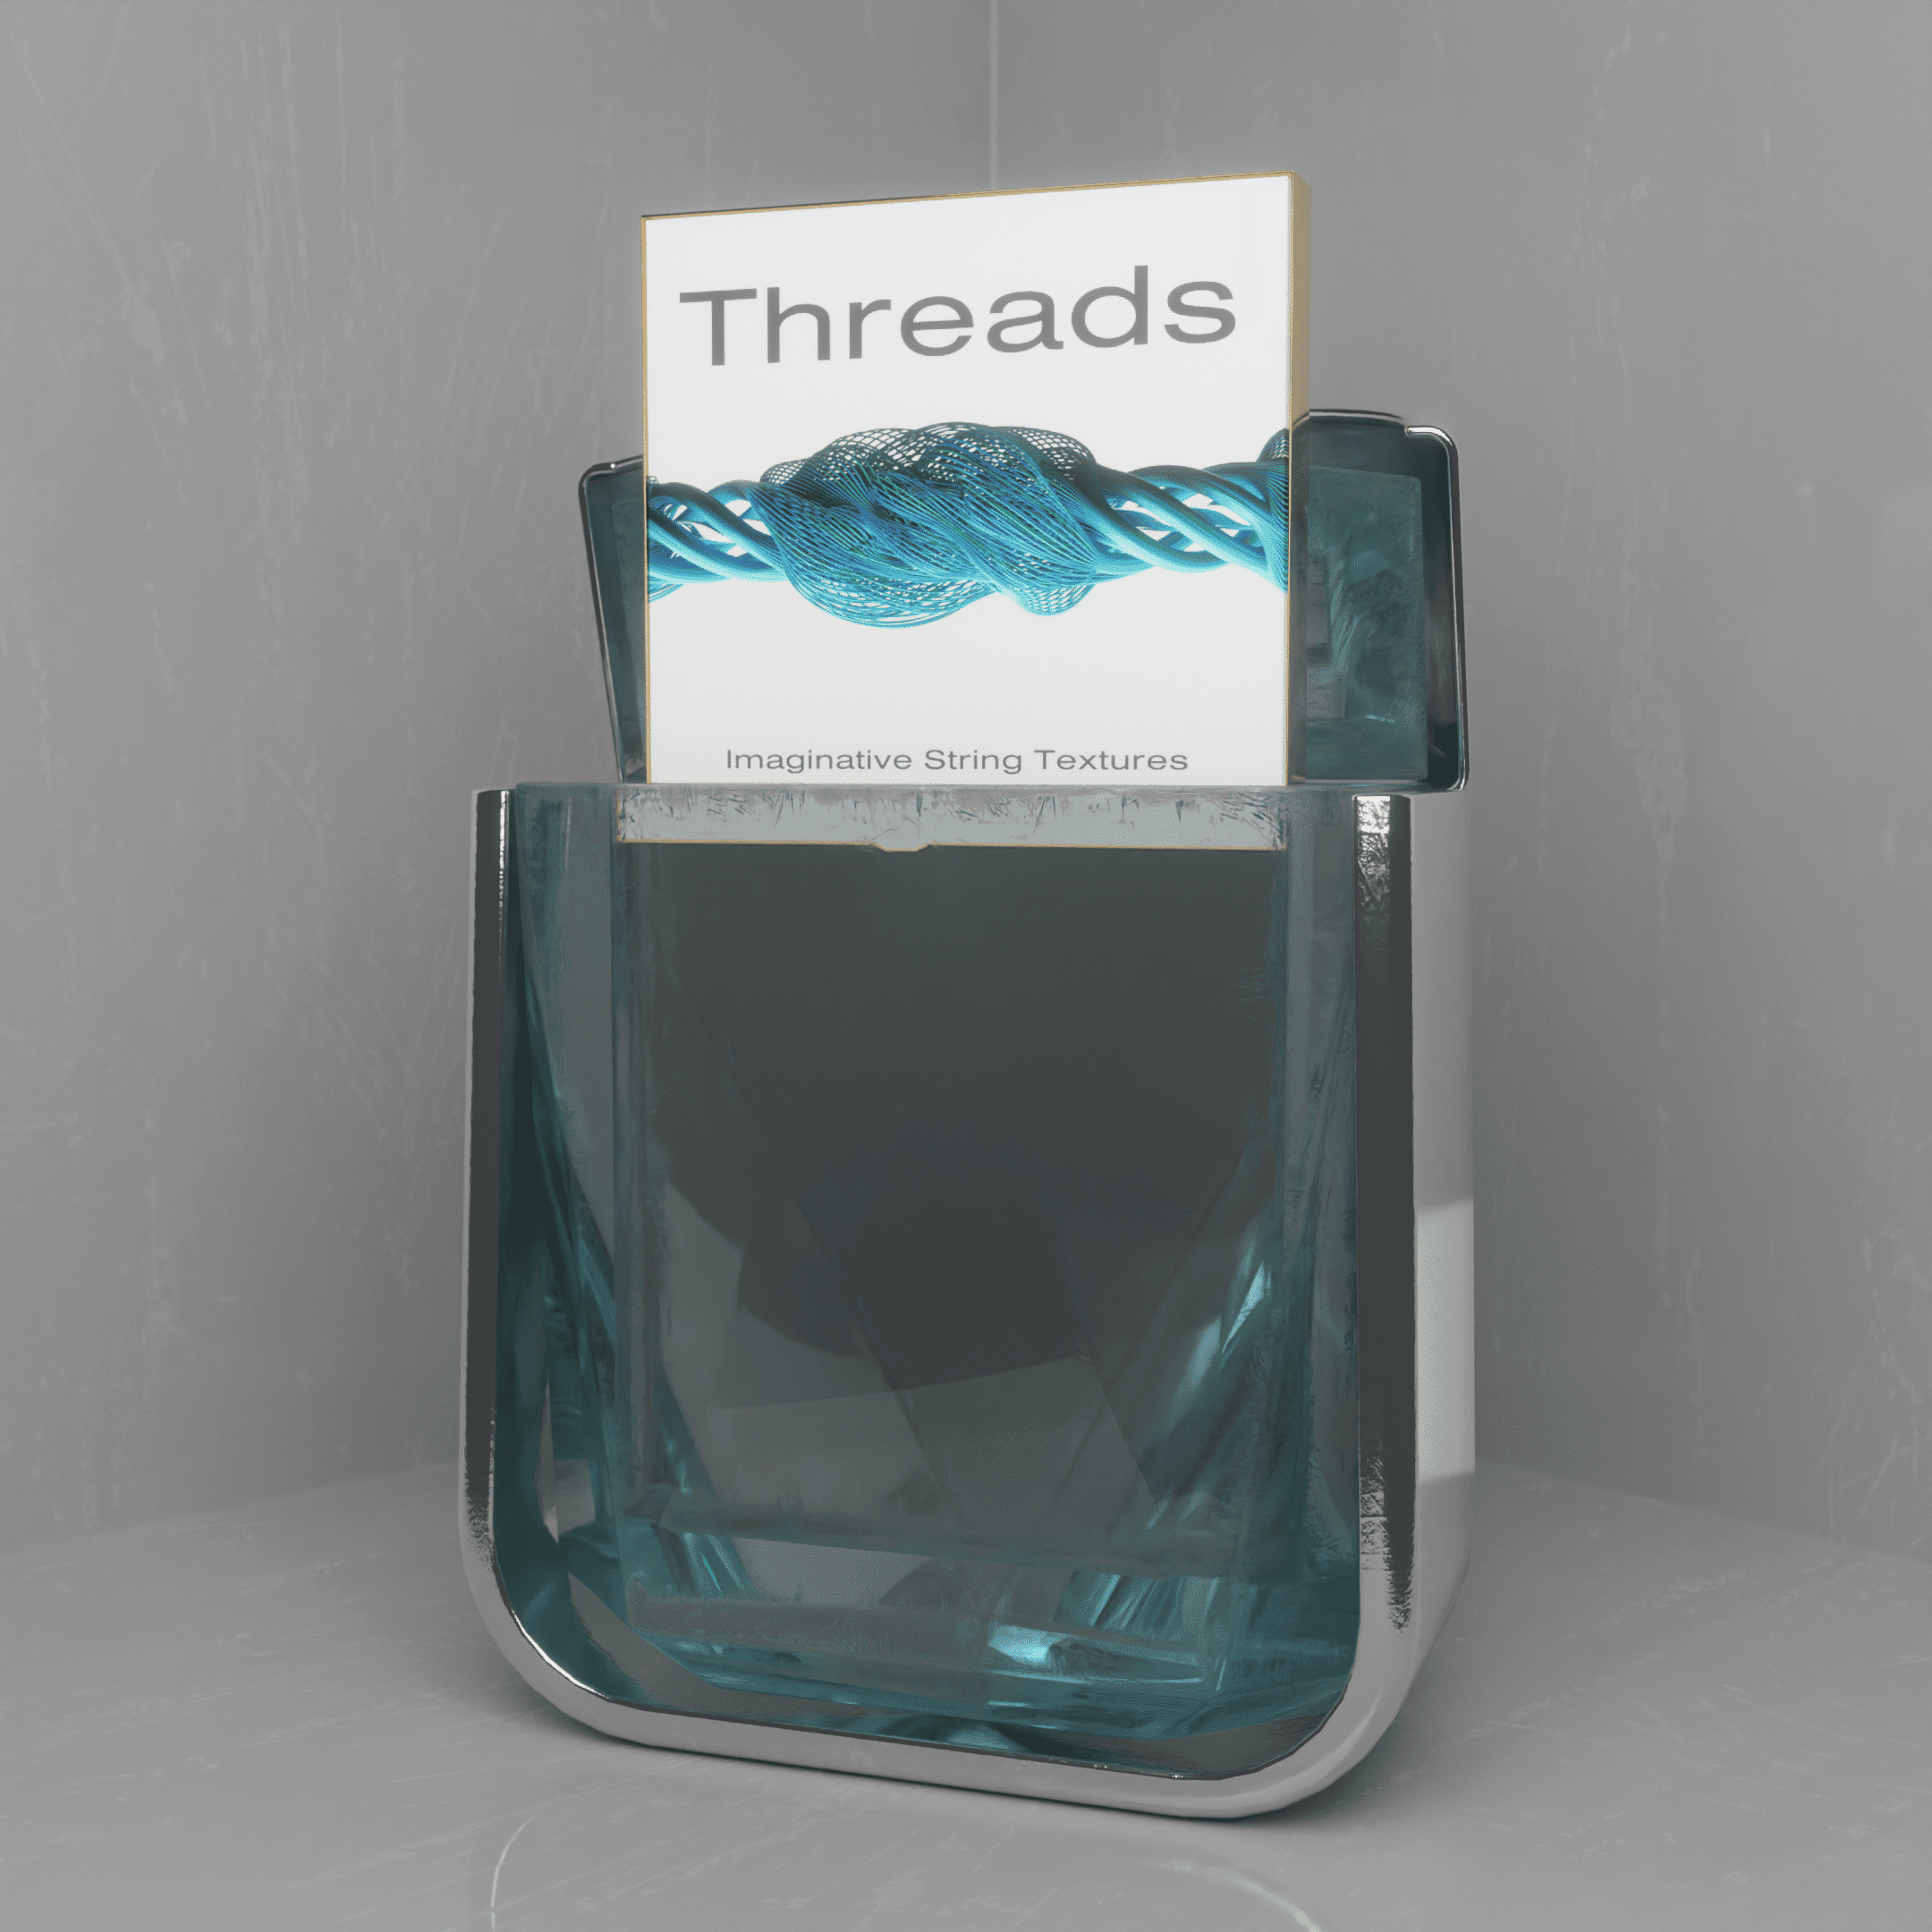 Threads製品